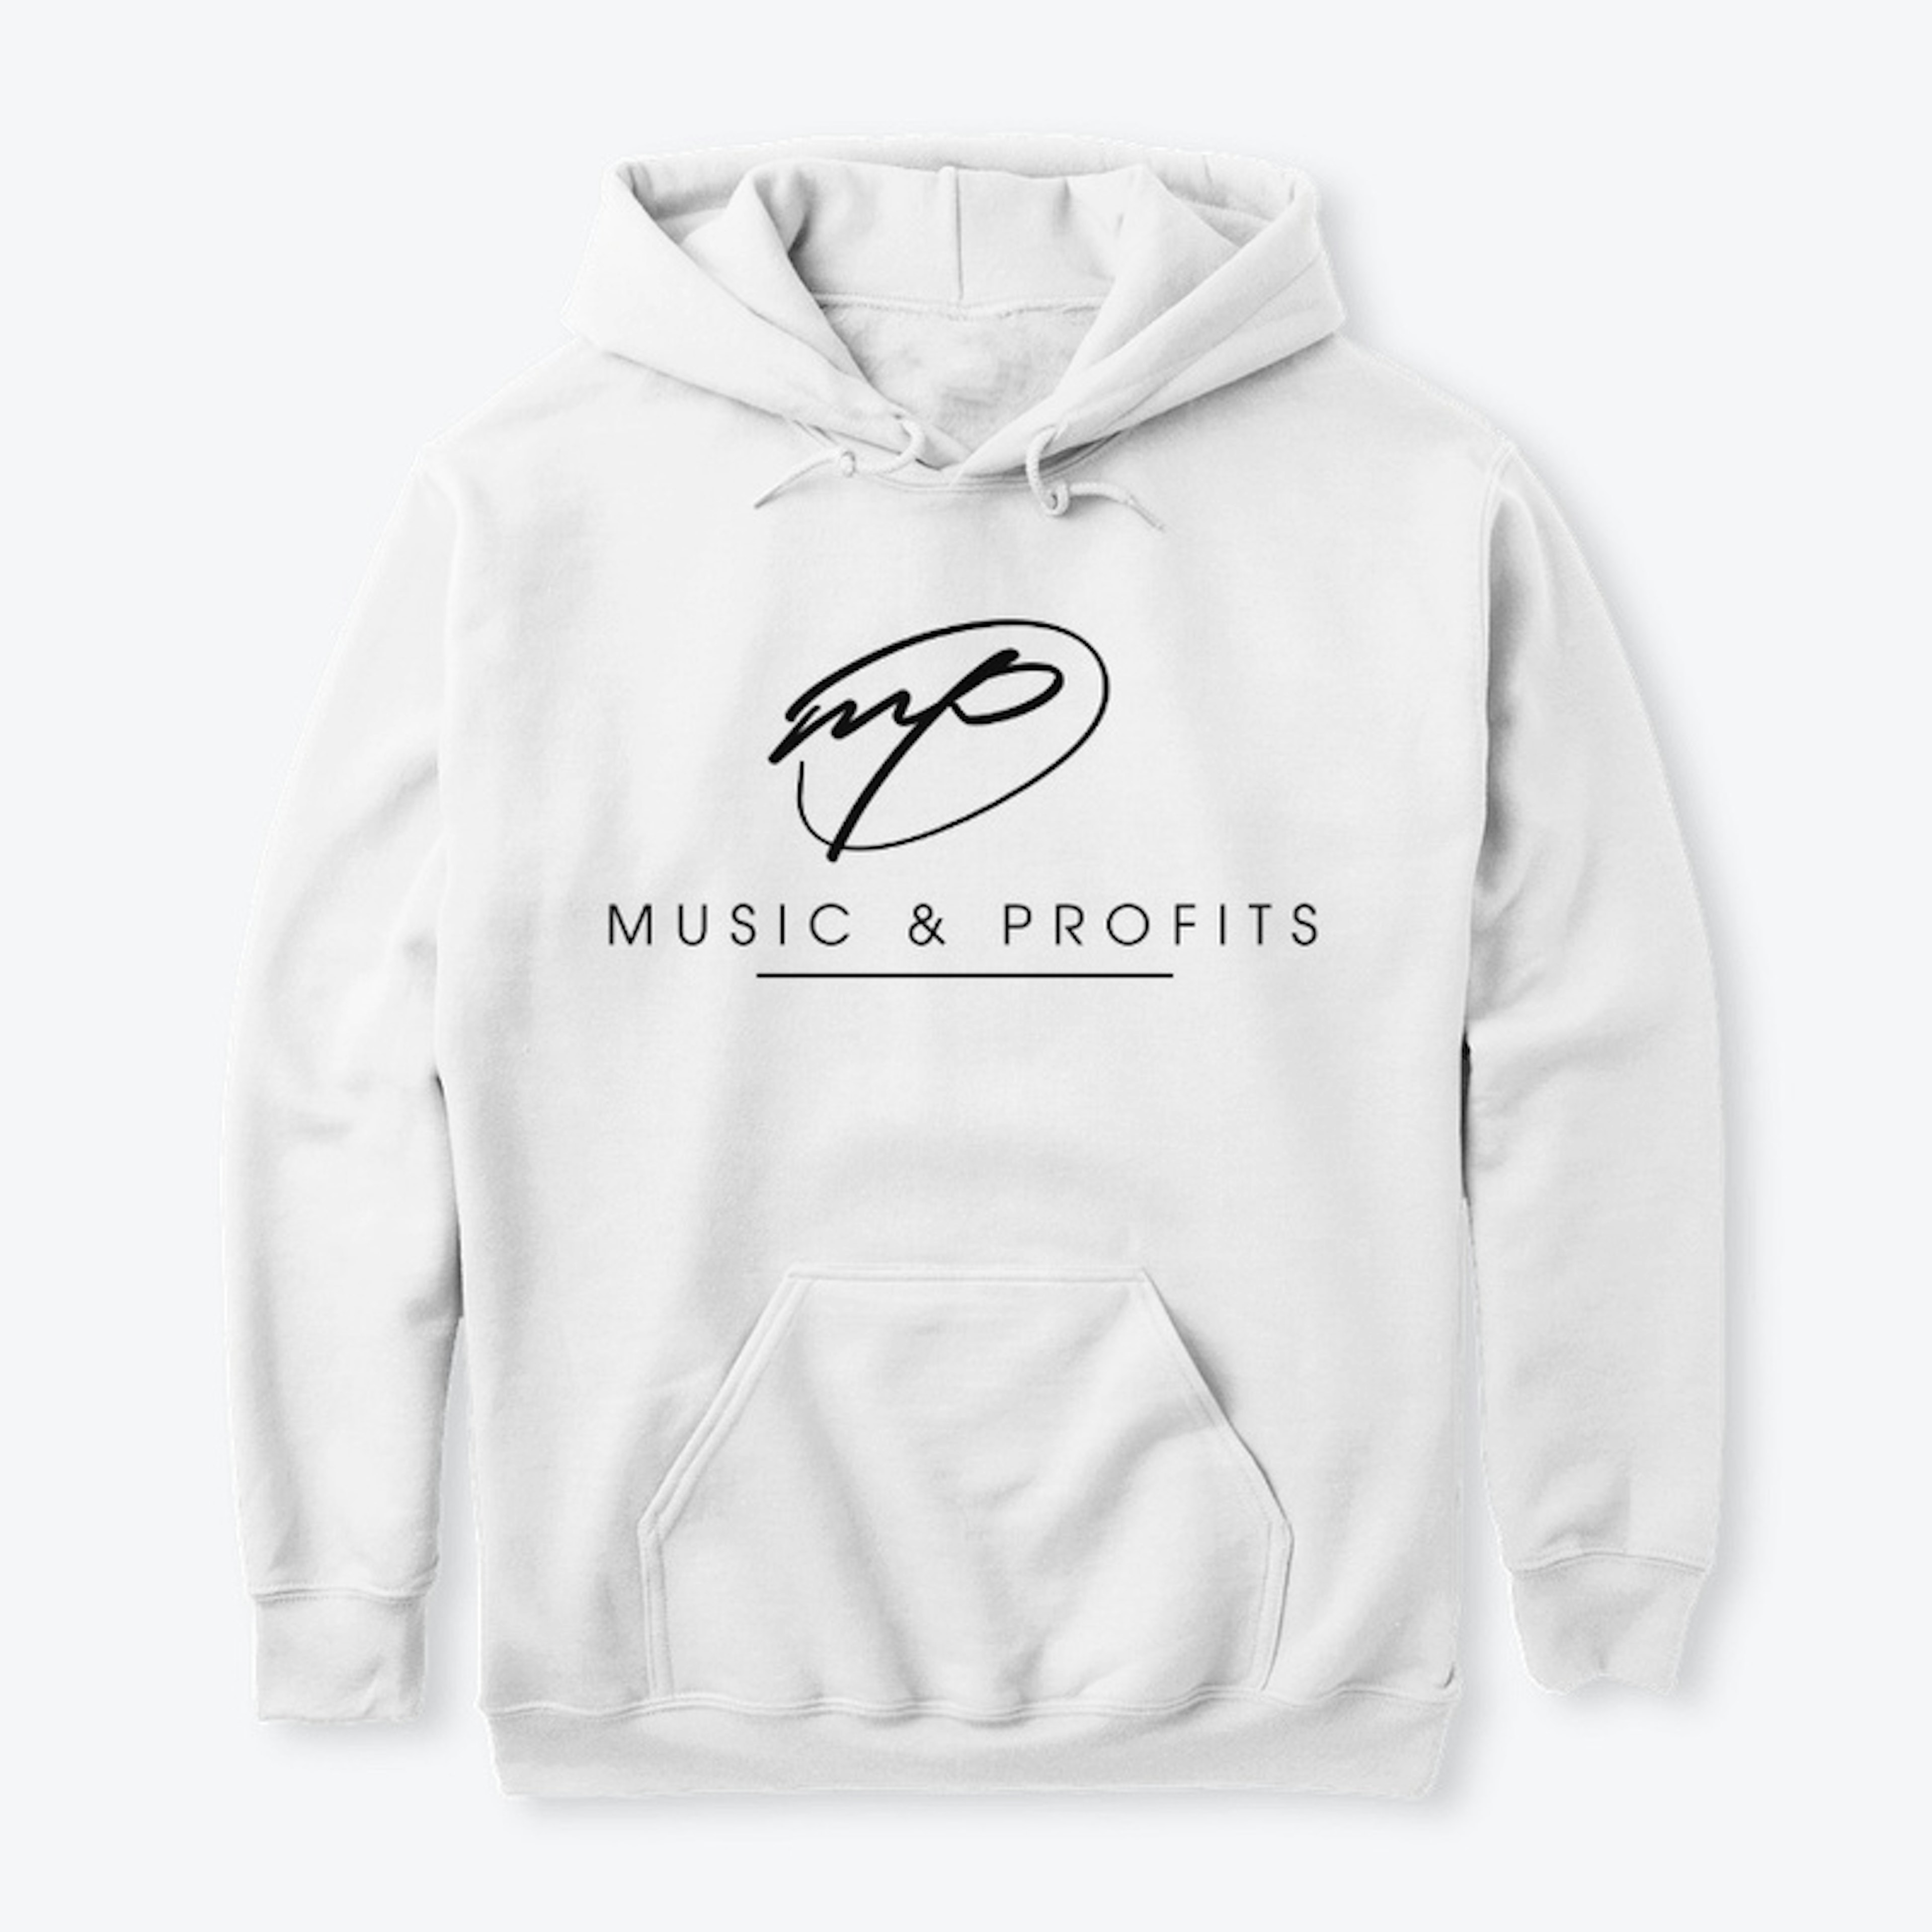 Music & Profits black logo